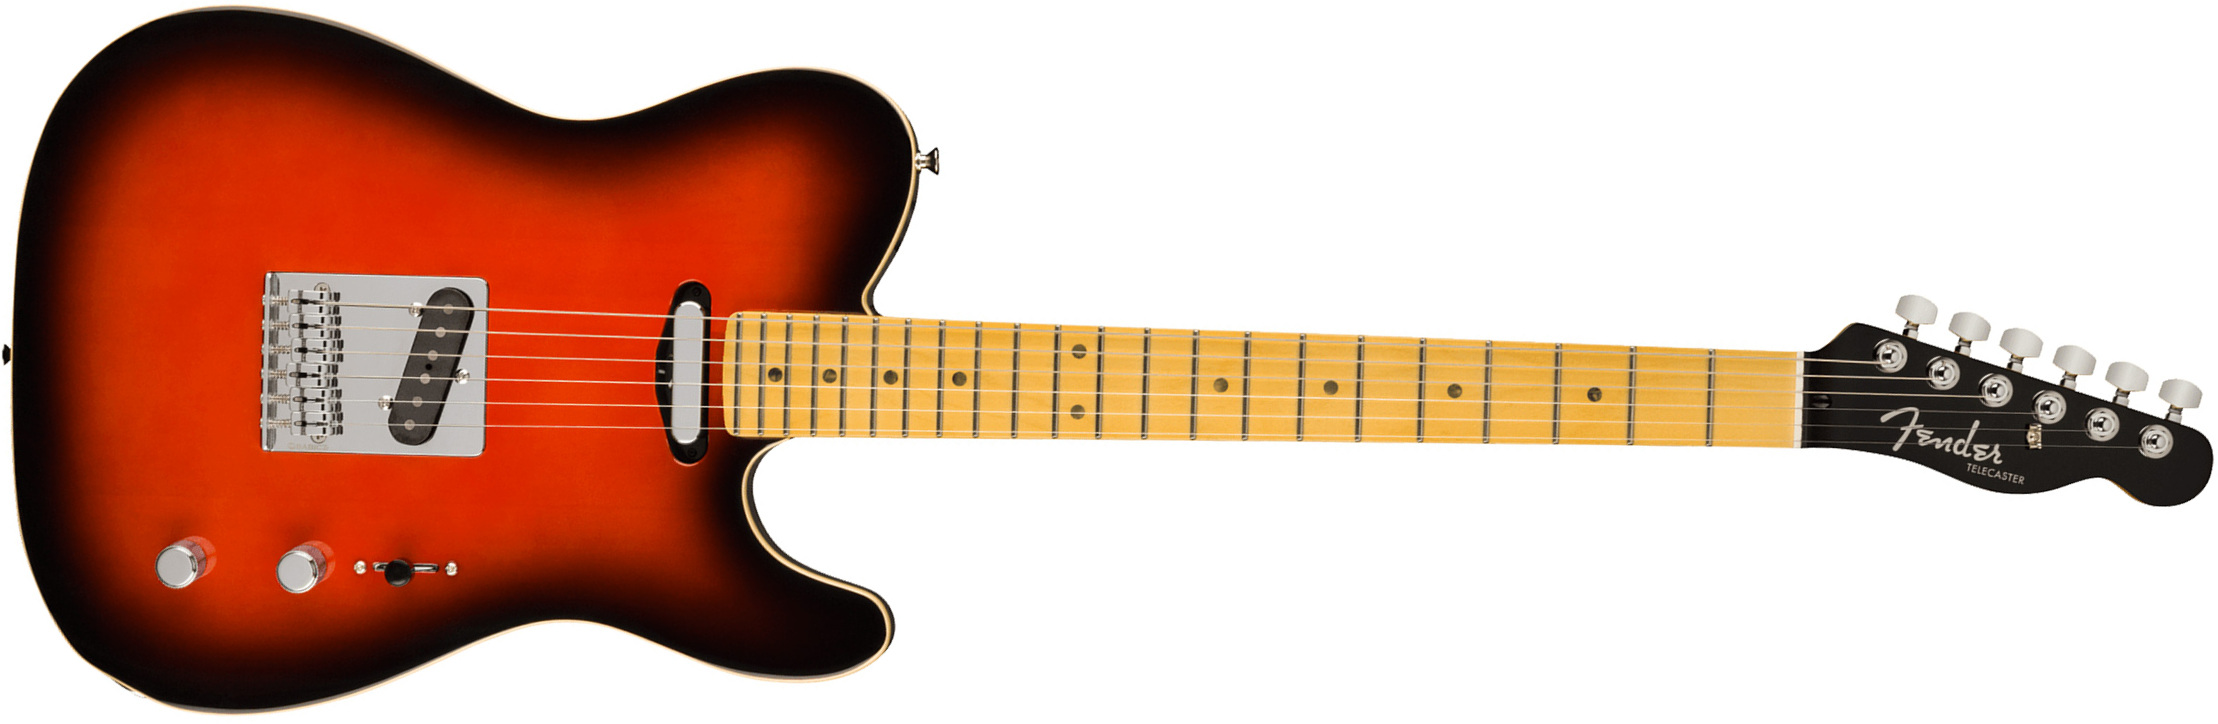 Fender Tele Aerodyne Special Jap 2s Ht Mn - Hot Rod Burst - Tel shape electric guitar - Main picture